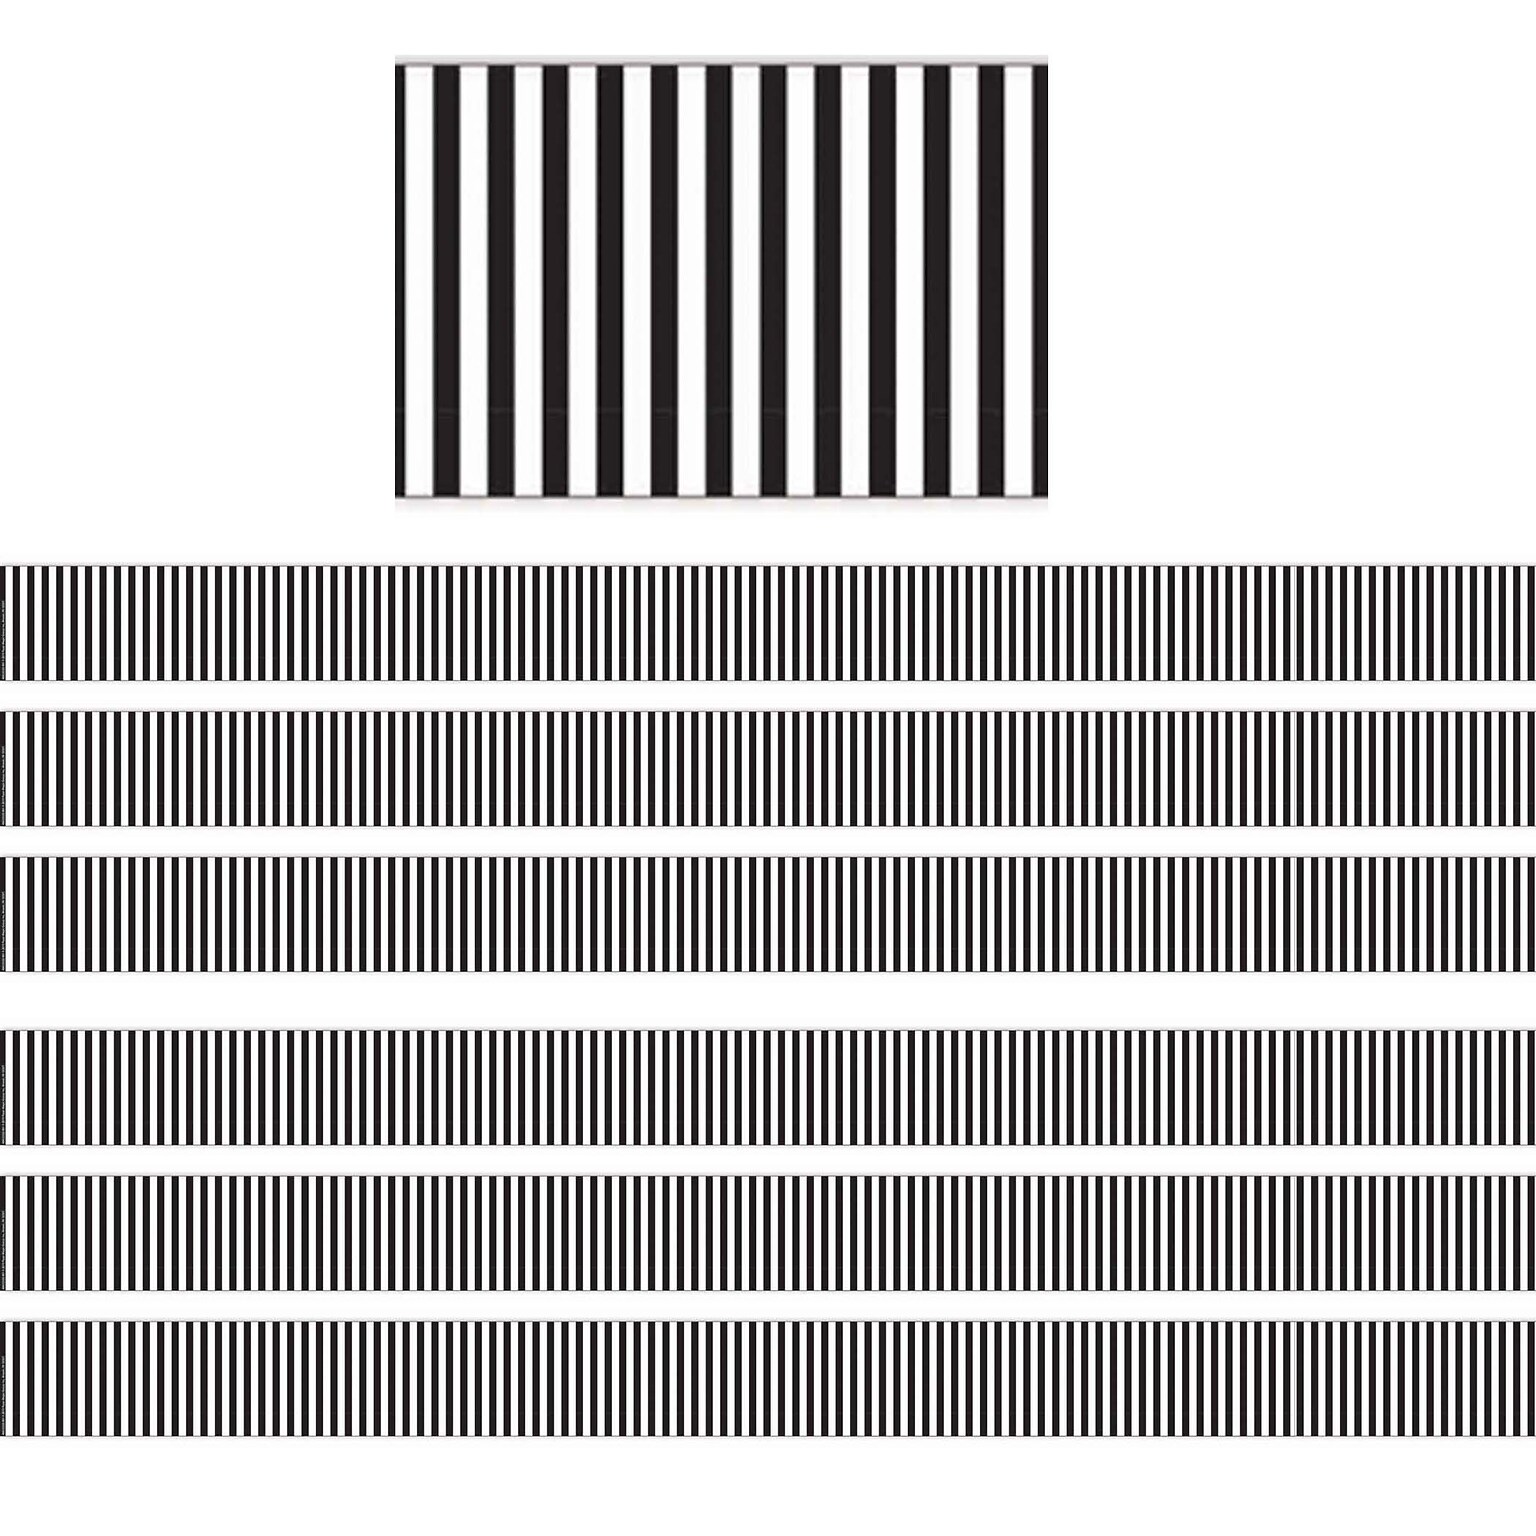 Eureka® Simply Sassy Extra Wide Straight Border, 3.25 x 222, Black and White Stripe (EU-845322-6)